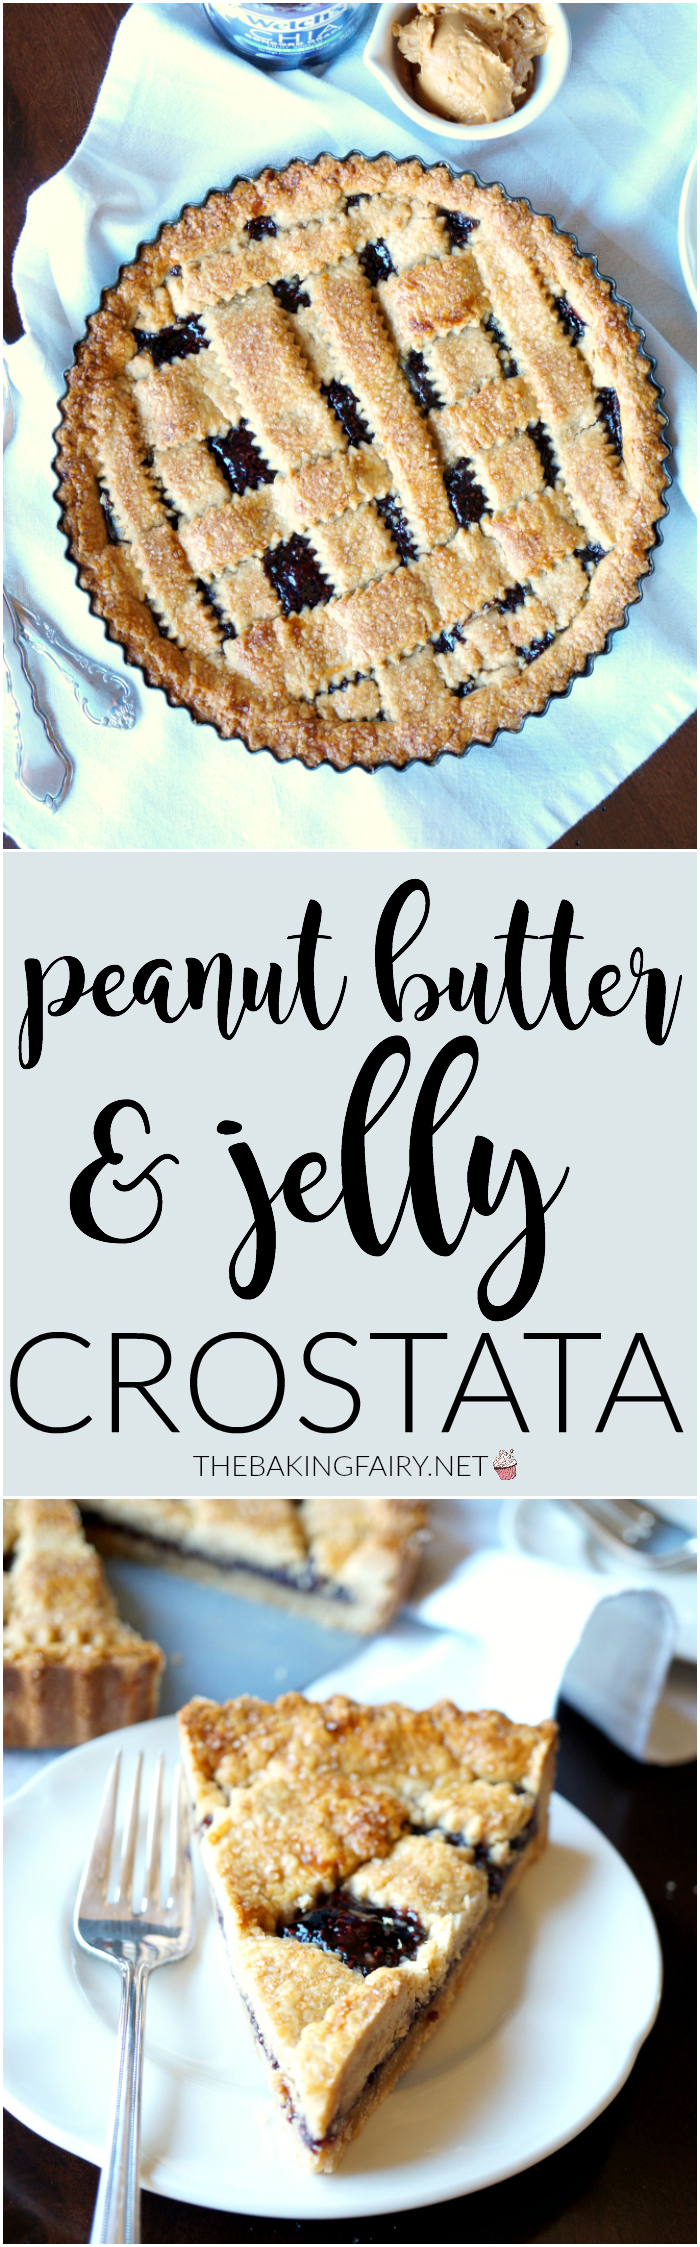 peanut butter & jelly crostata | The Baking Fairy